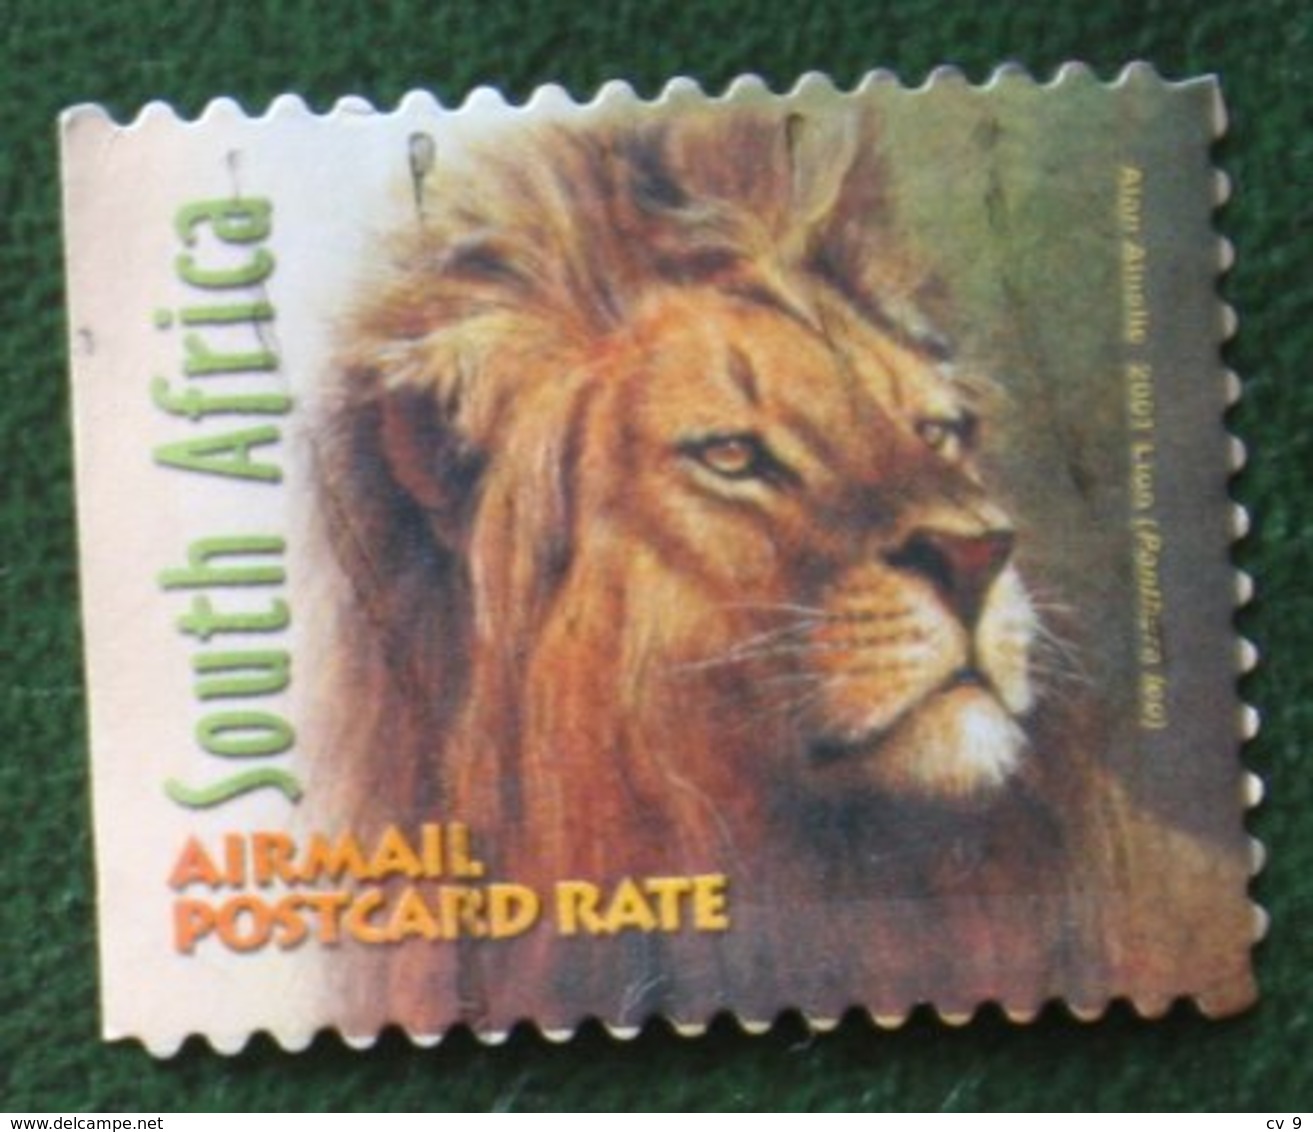 Leeuw Lion Leo Löwe Airmail Postcard Rate 2001 Mi 1339 Y&T - Used Gebruikt Oblitere SUD SOUTH AFRICA RSA - Gebraucht